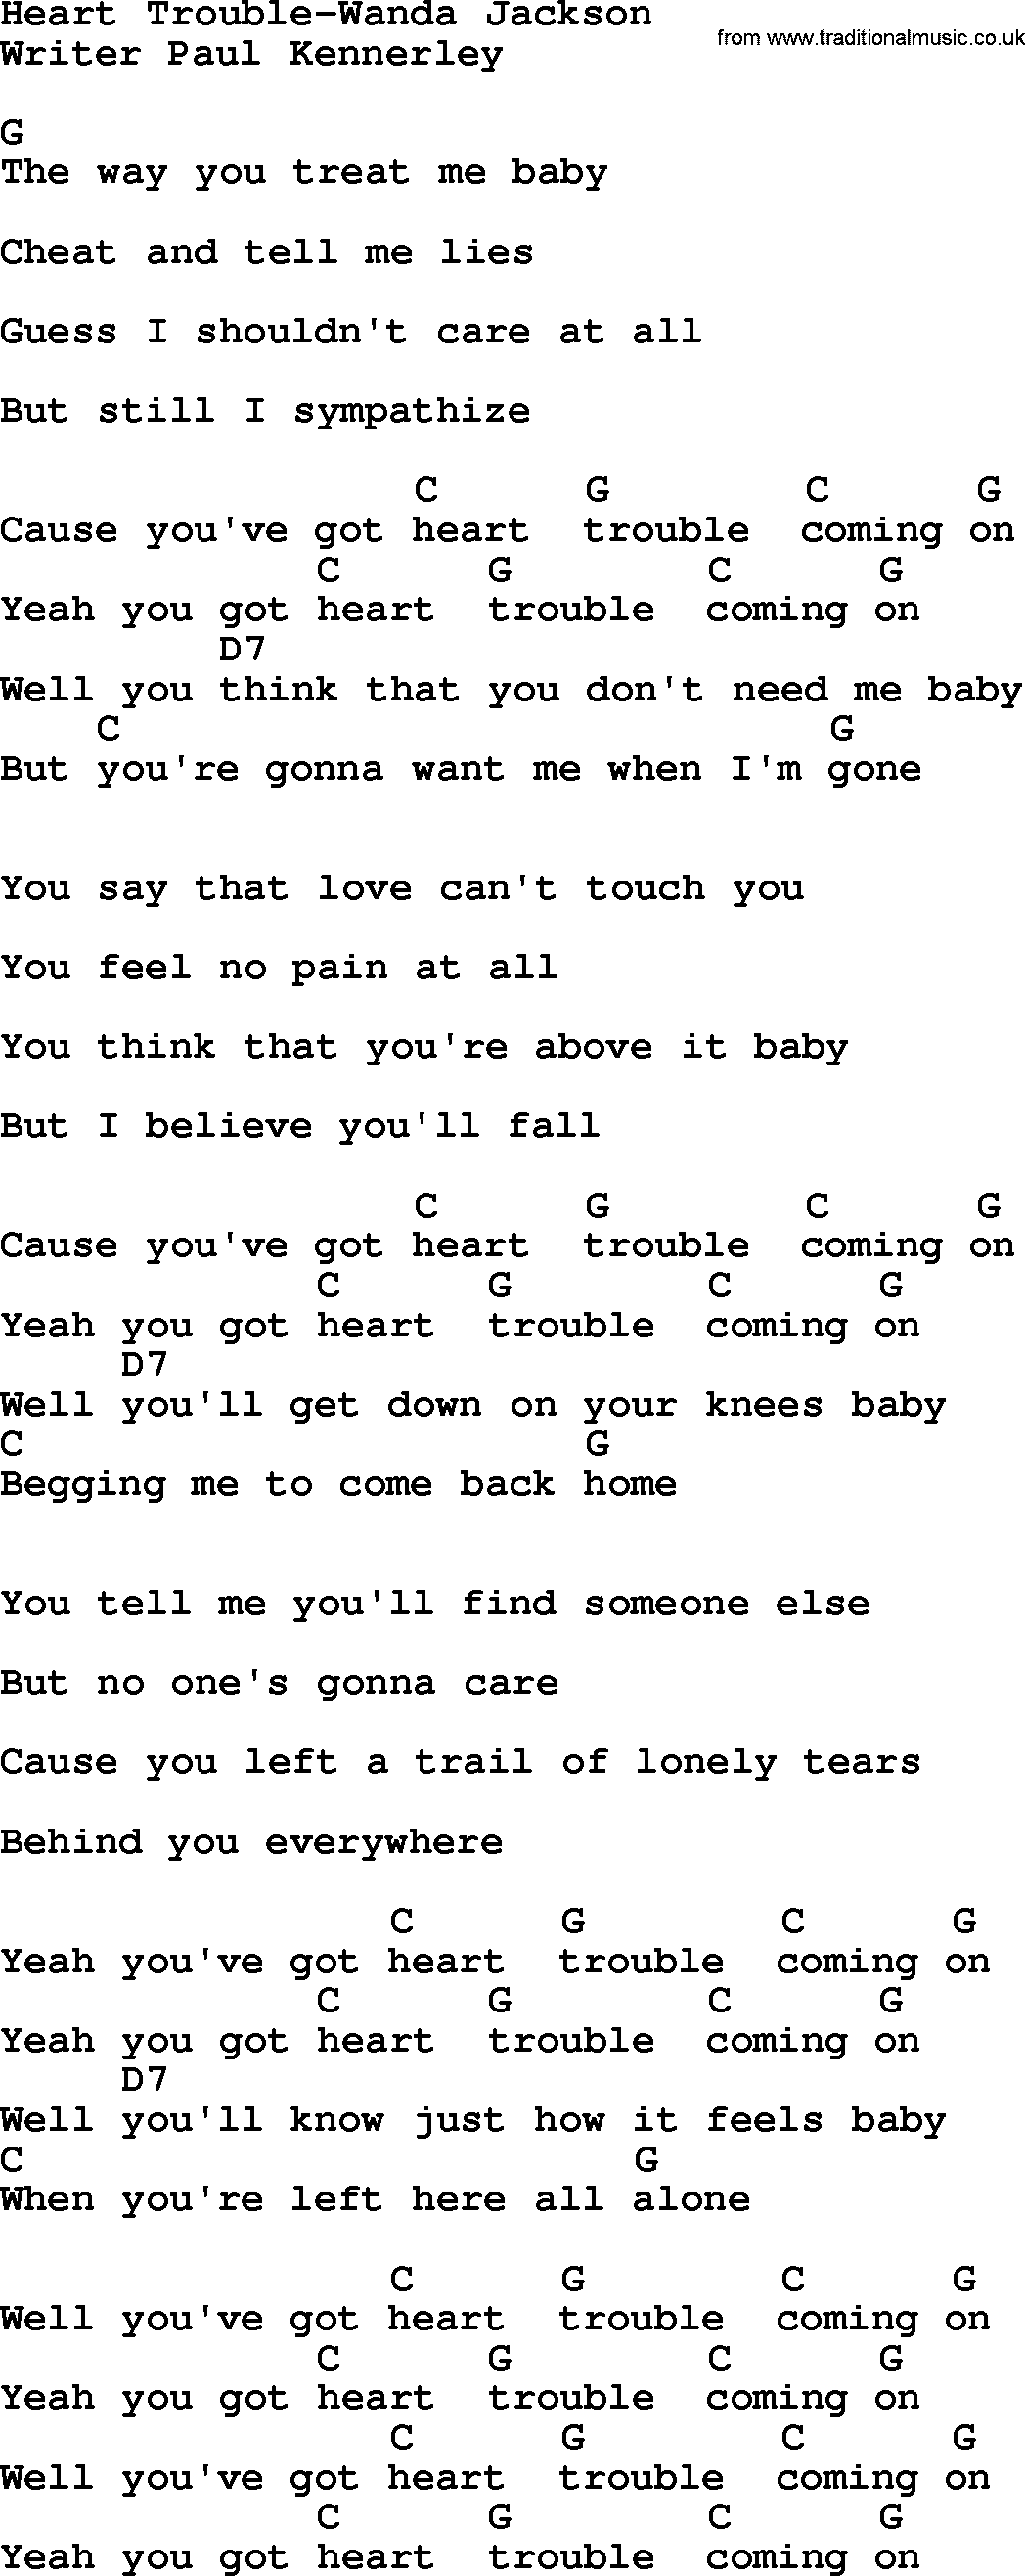 Country music song: Heart Trouble-Wanda Jackson lyrics and chords